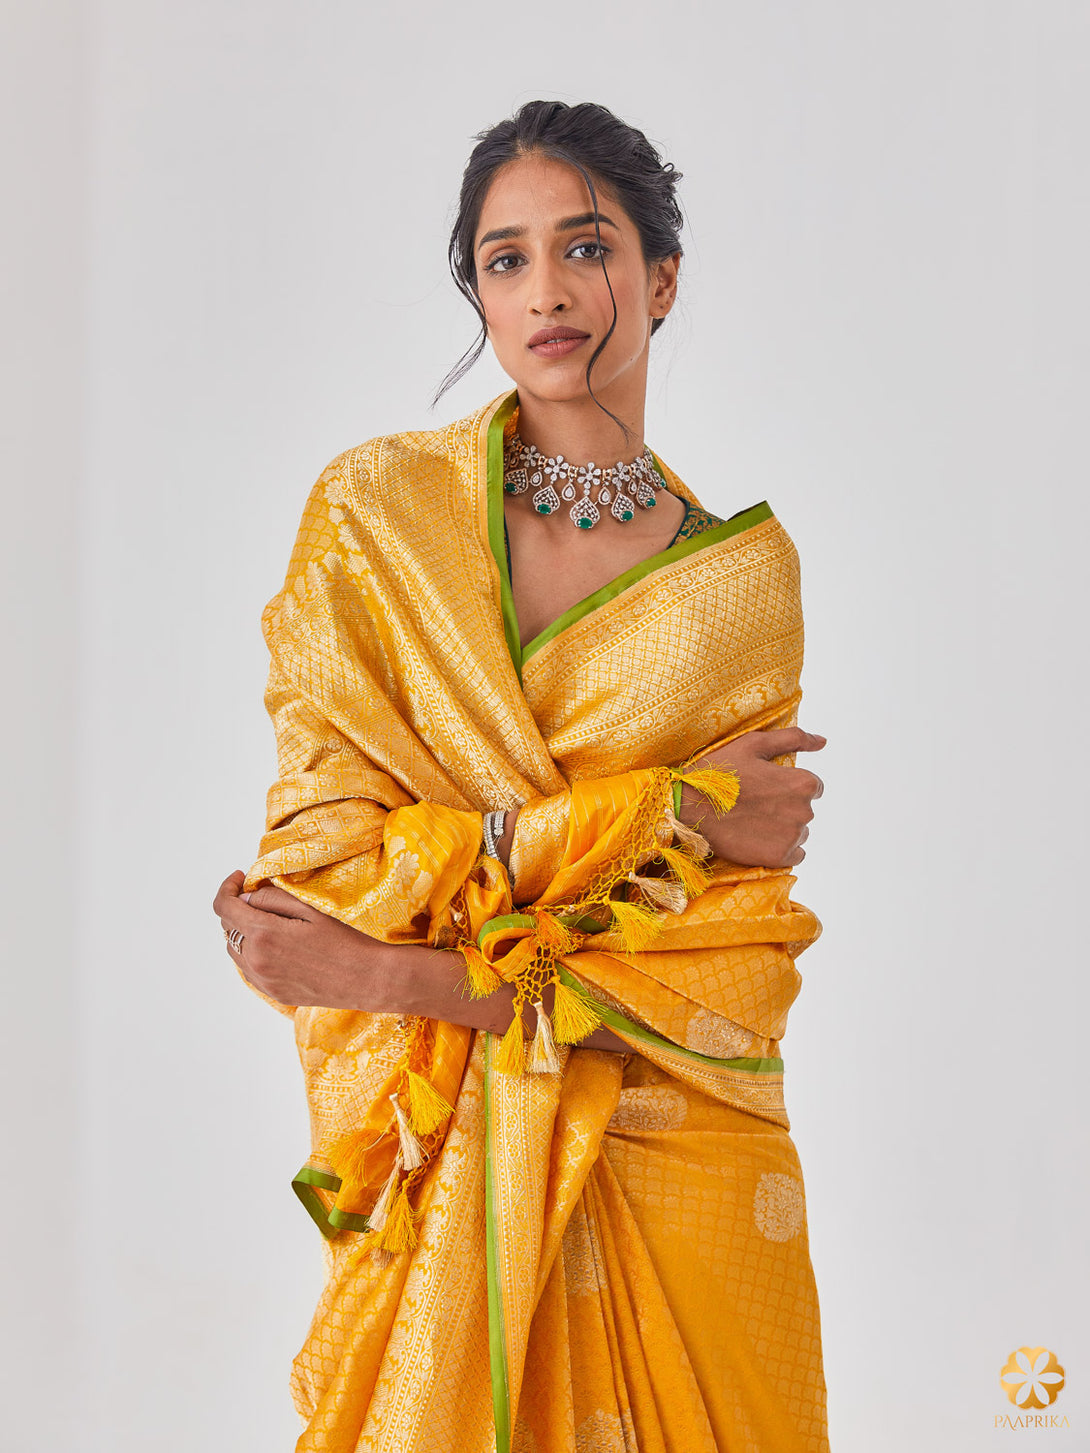 Timeless Sandal Yellow Banarasi Saree - Elegance and Charm Personified.